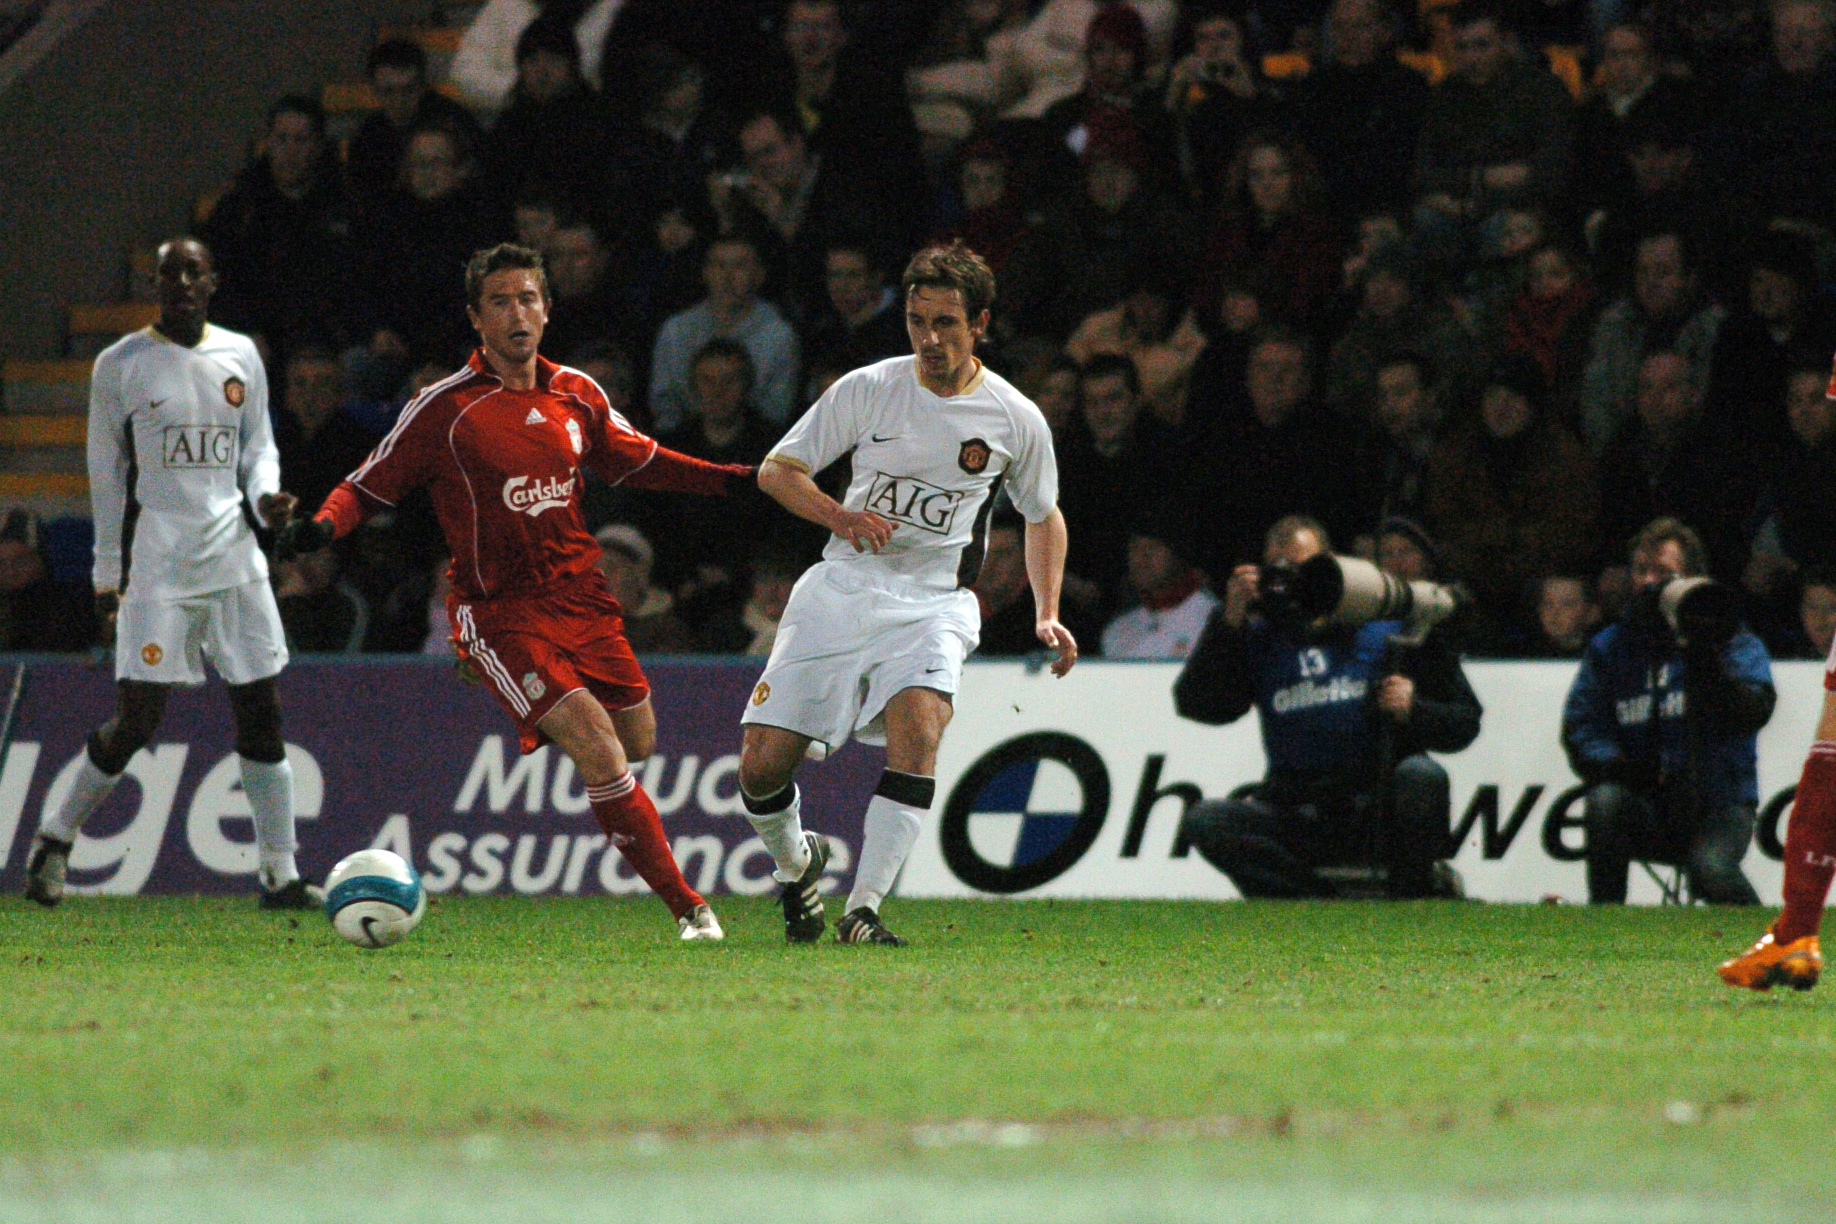 Gary Neville tracks Harry Kewell in the 2008 Liverpool Reserves v Manchester United Reserves game